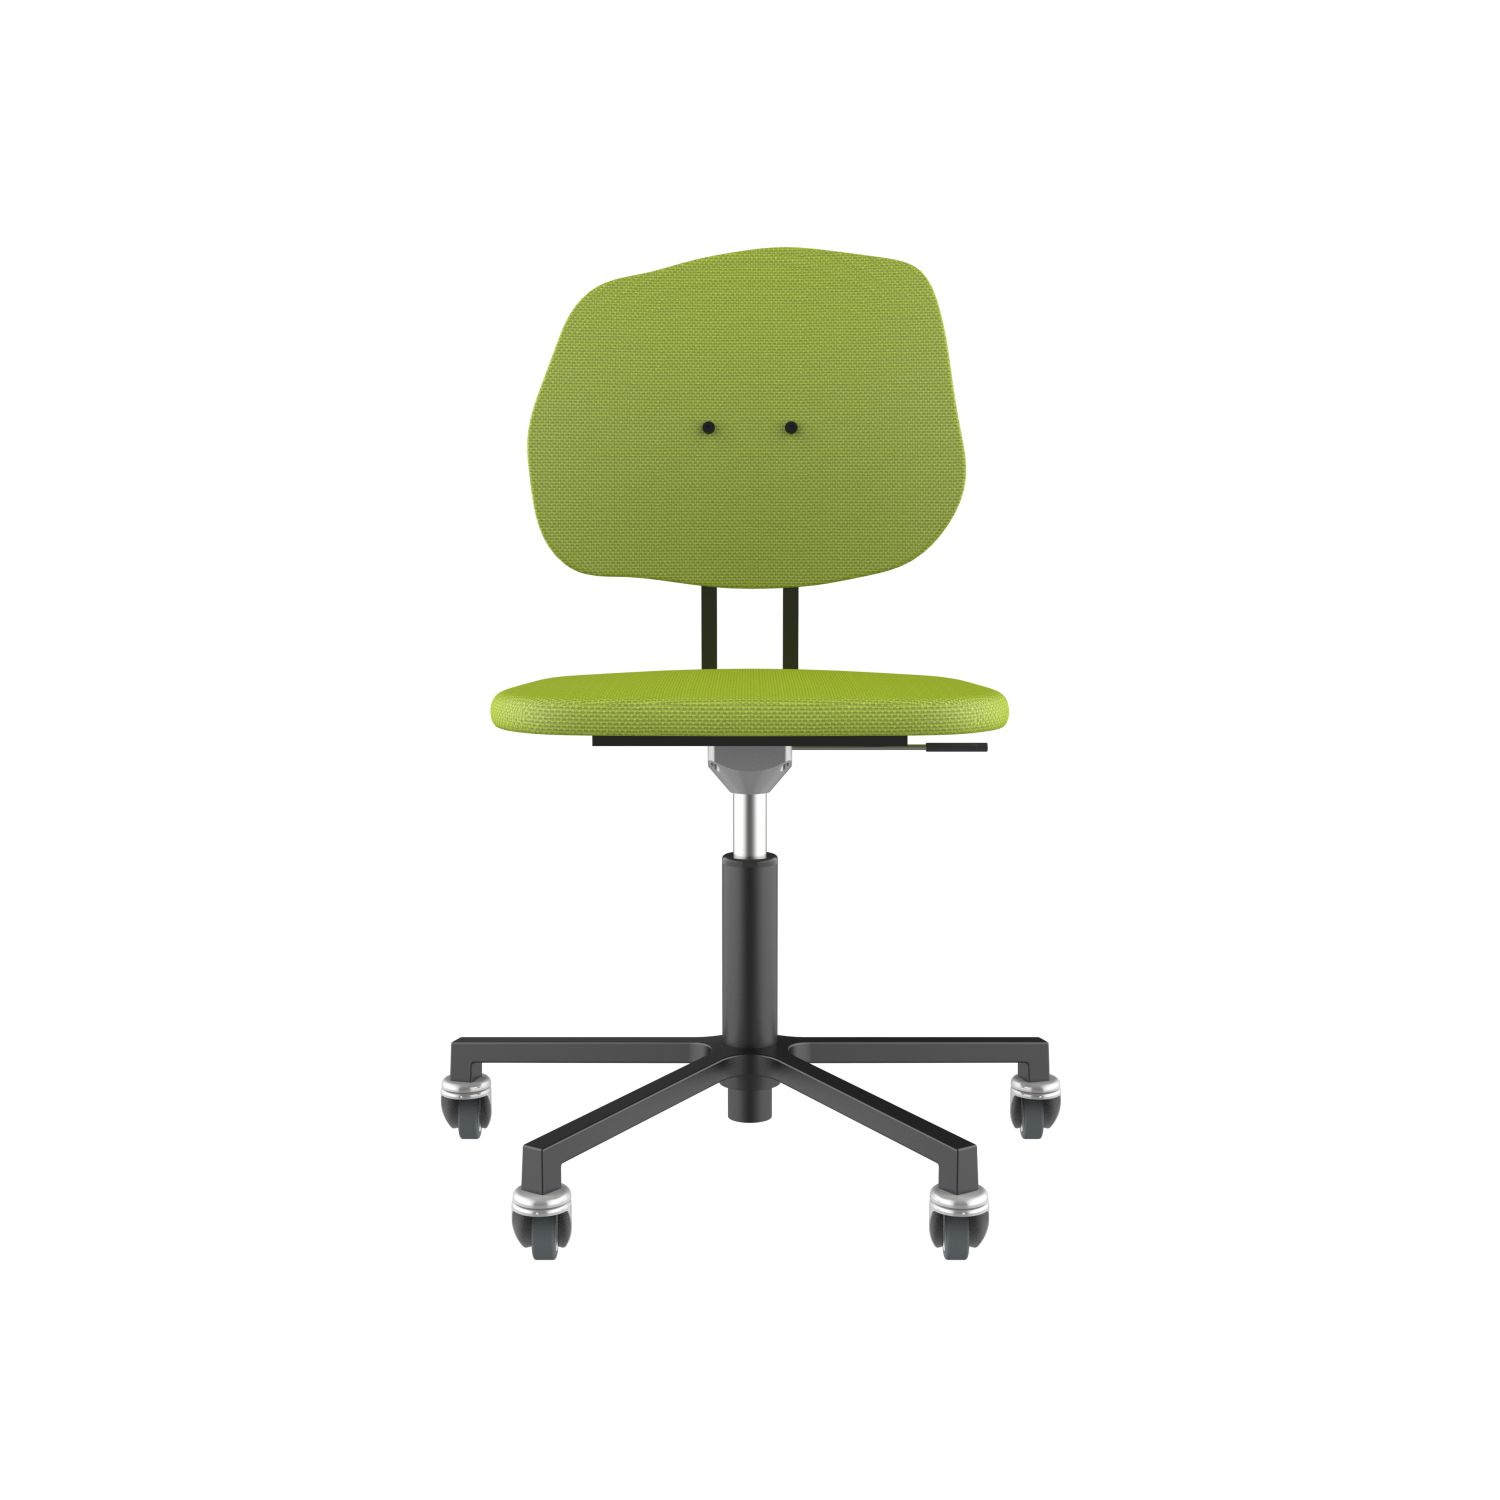 lensvelt maarten baas office chair without armrests backrest g fairway green 020 black ral9005 soft wheels